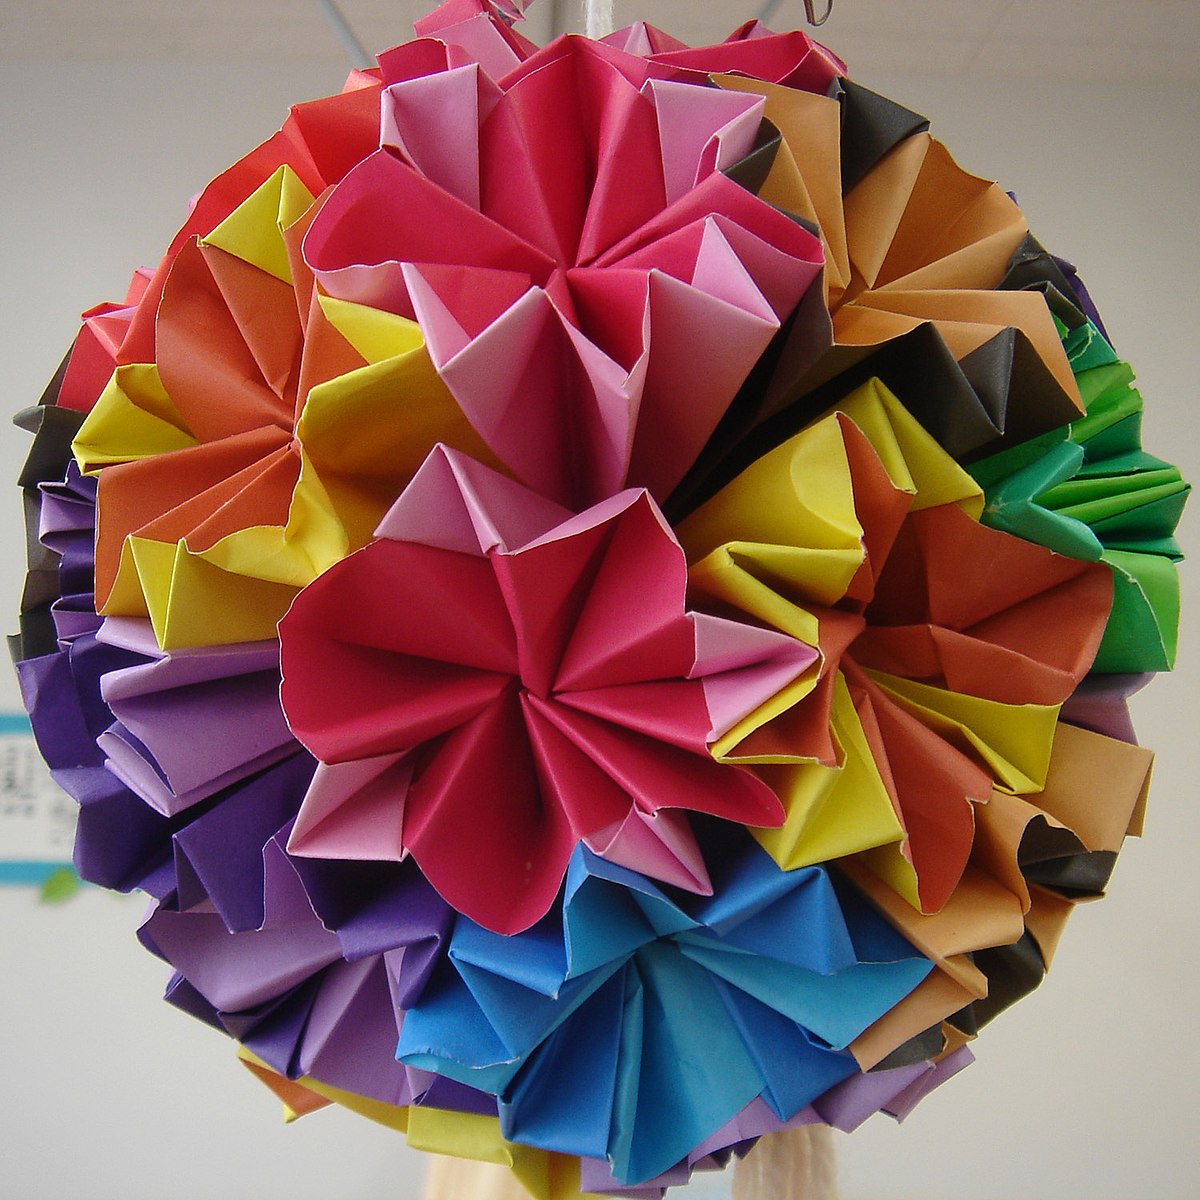 File:Origami ball.jpg - Wikipedia